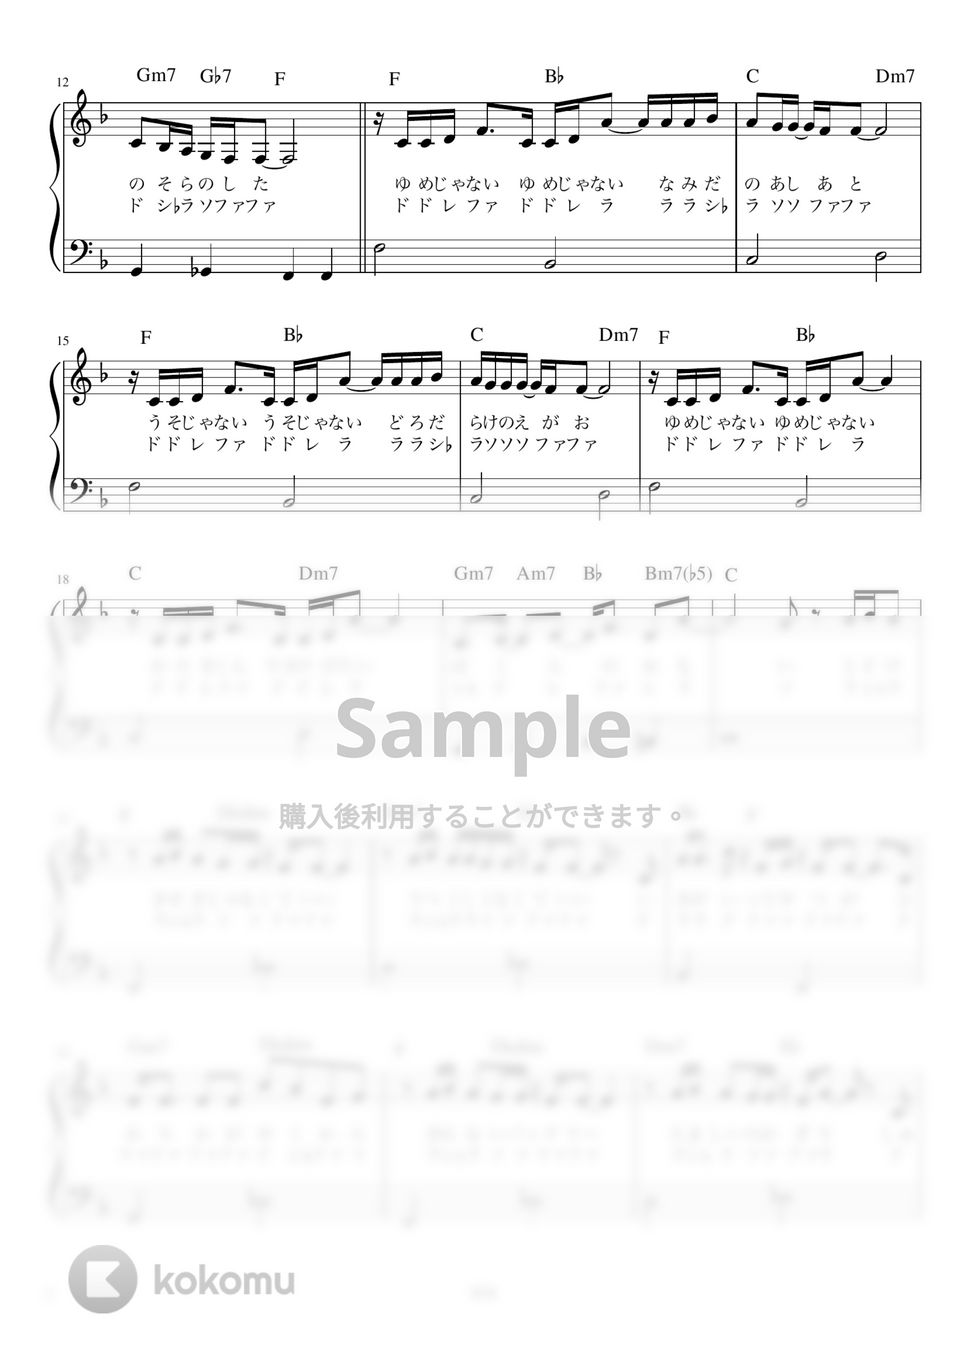 Official髭男dism - 宿命 (ピアノ かんたん 歌詞付き ドレミ付き 初心者) by piano.tokyo